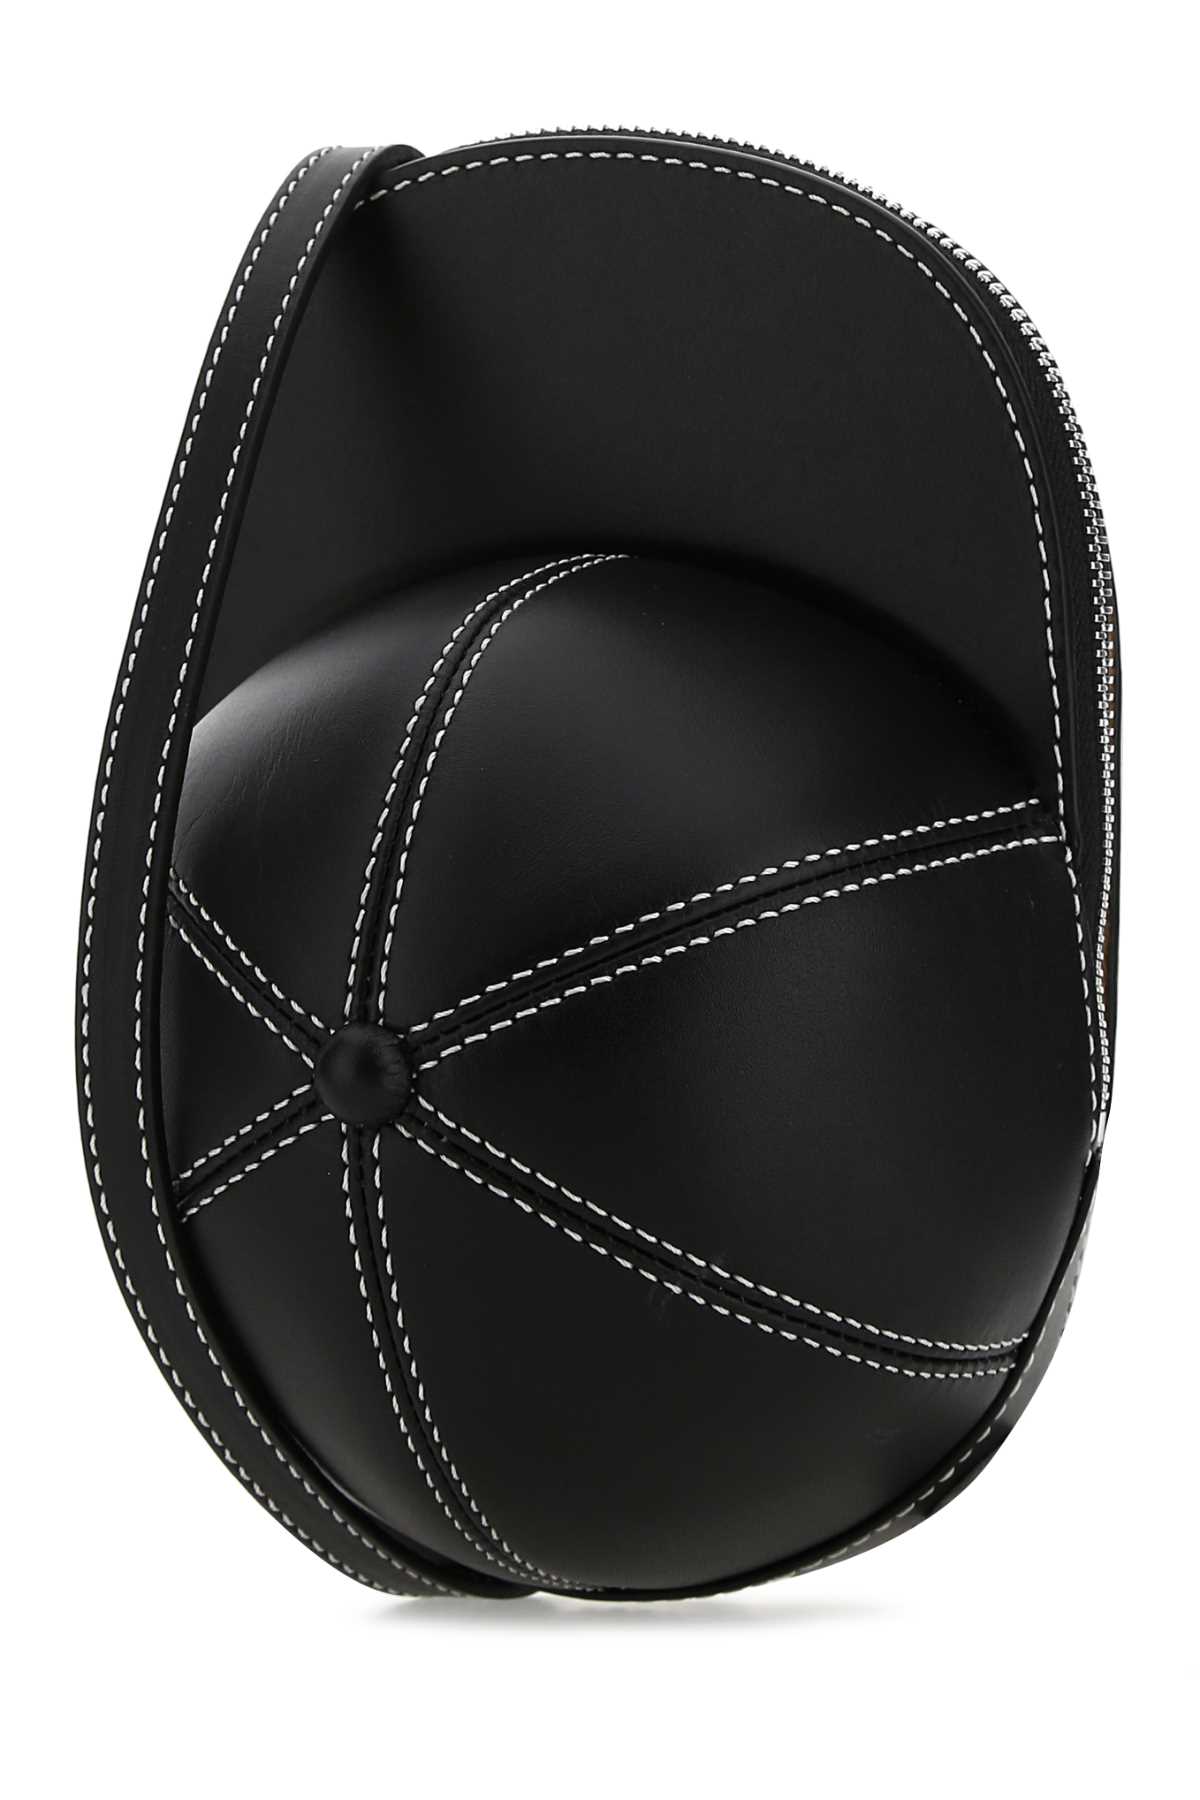 Jw Anderson Black Leather Medium Cap Crossbody Bag In 999